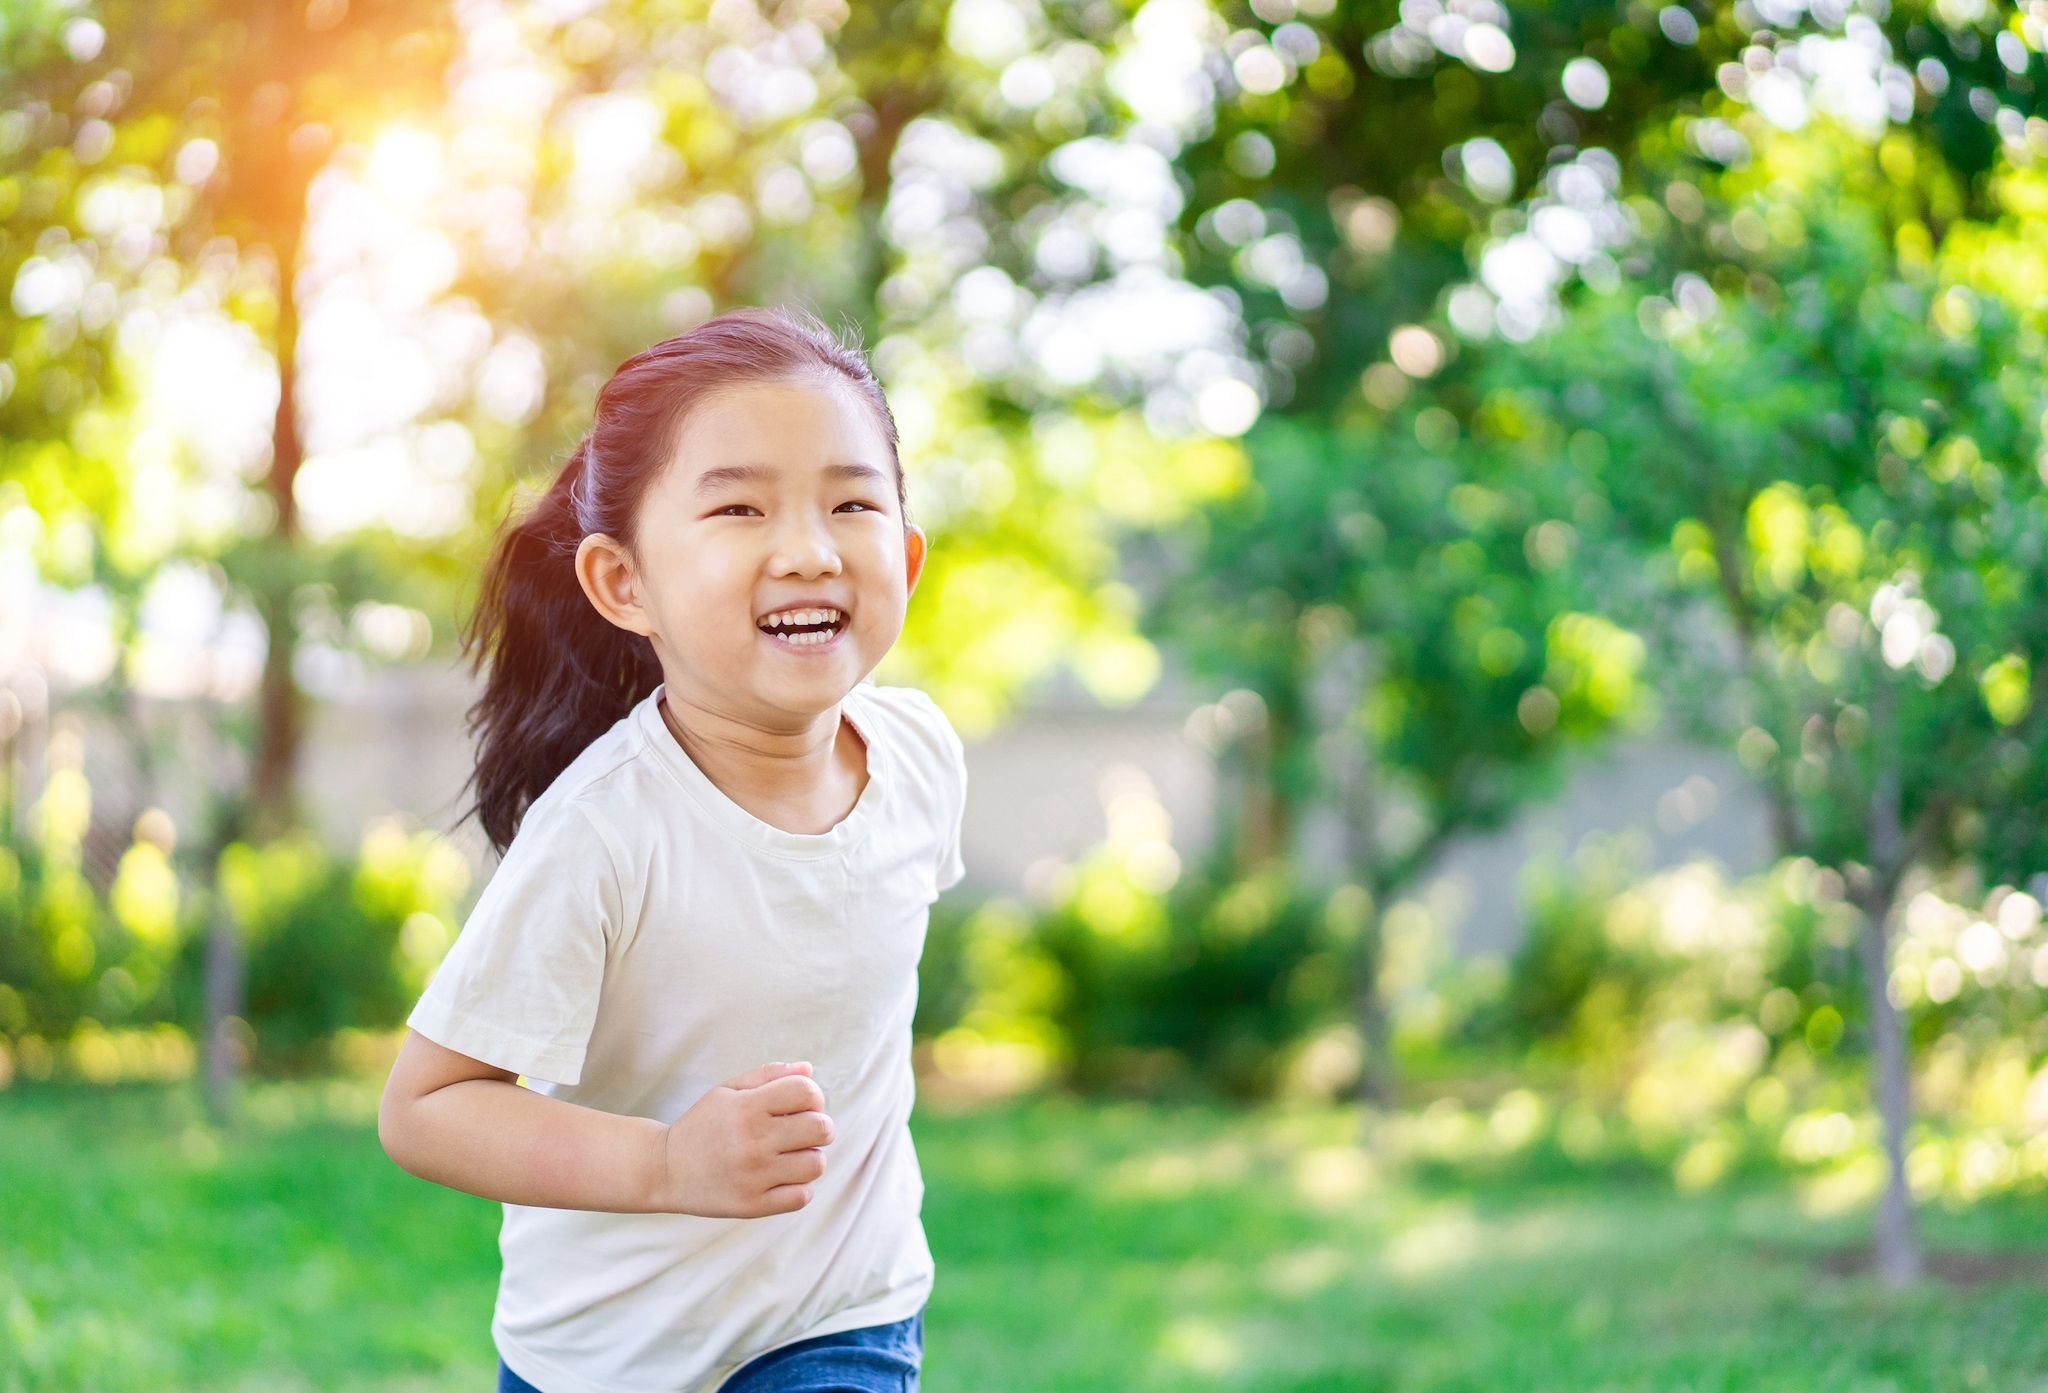 Young girl running in yard